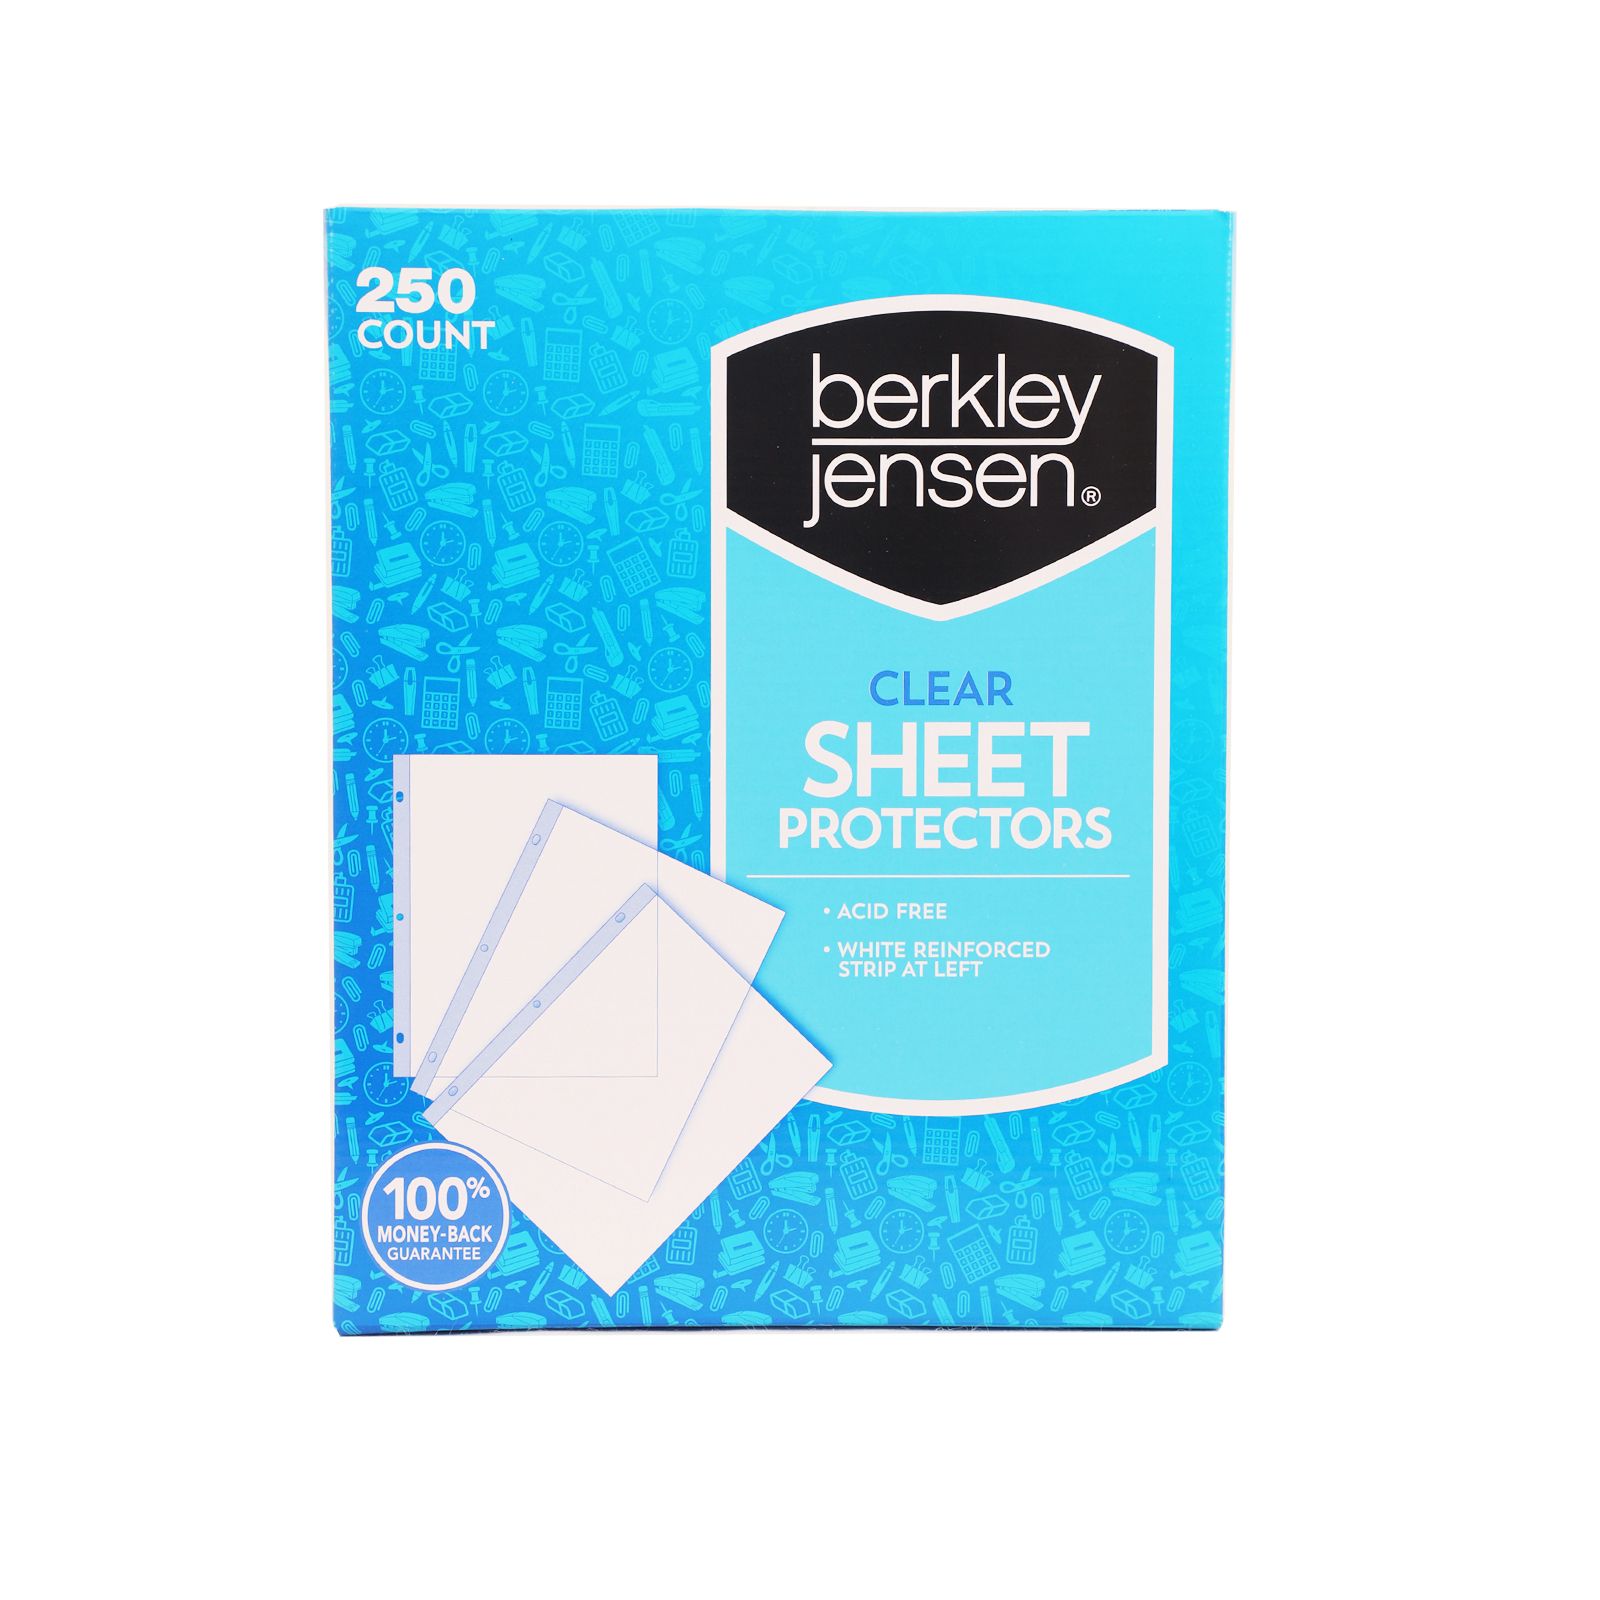 Berkley Jensen Clear Sheet Protectors